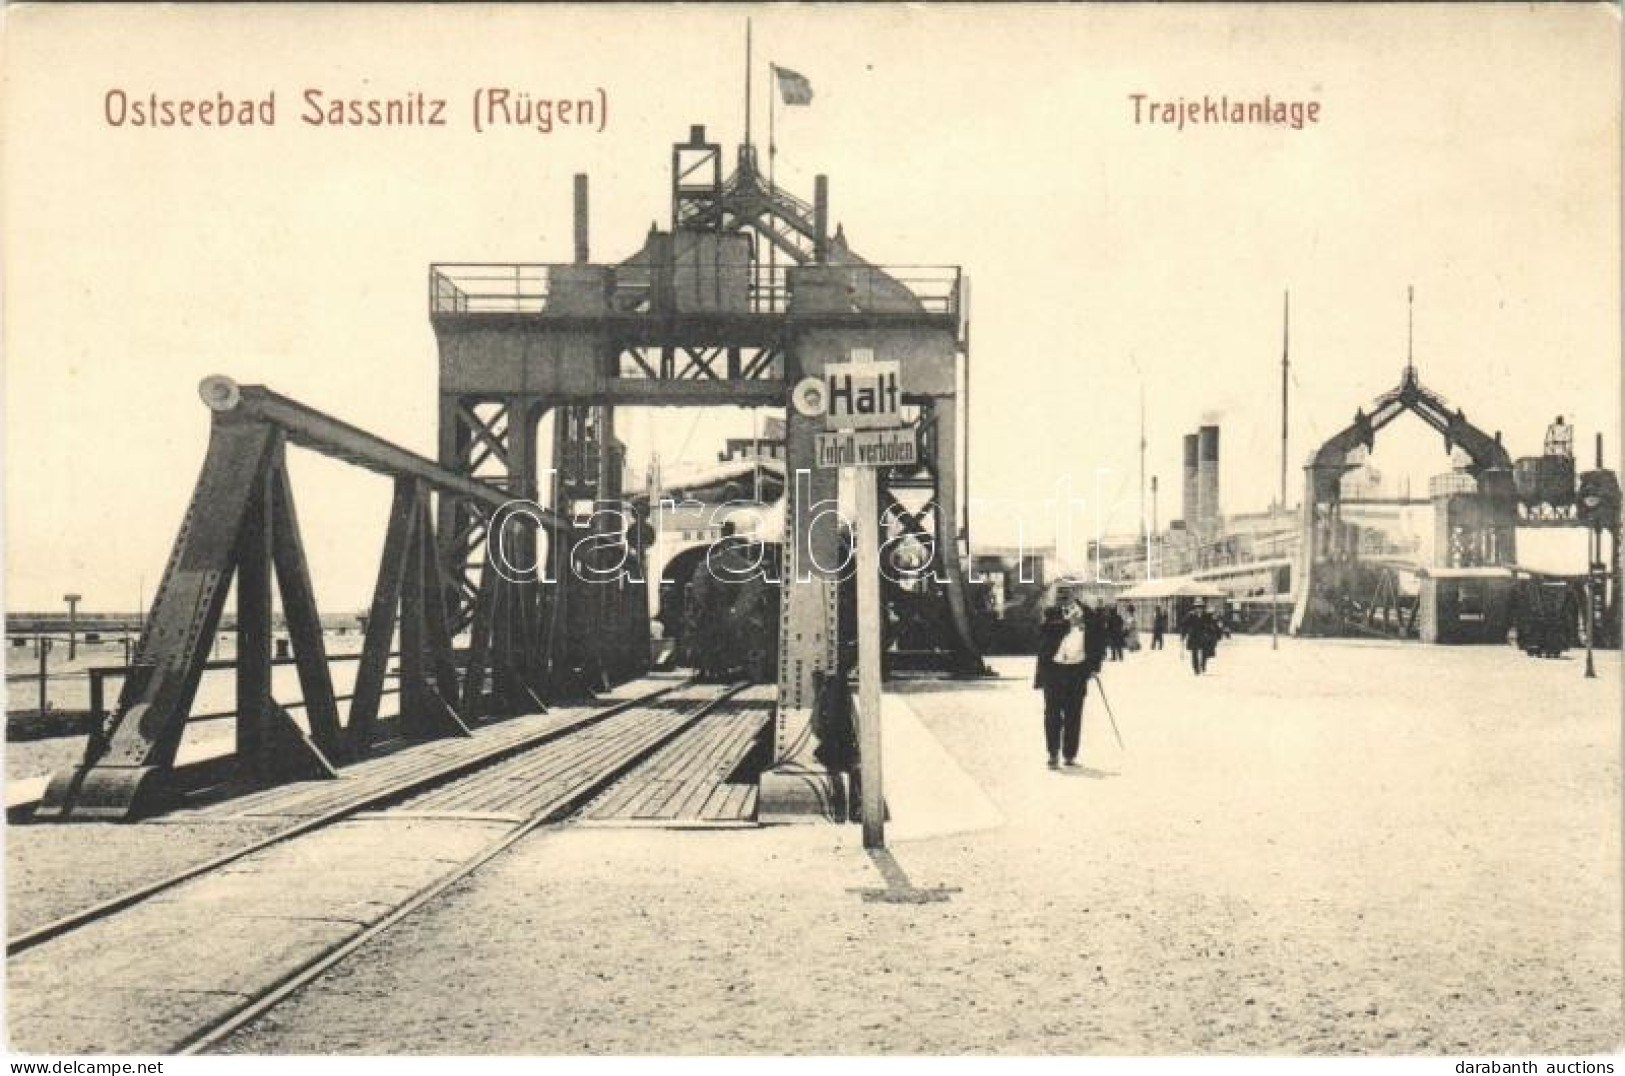 ** T1 Sassnitz (Rügen), Ostseebad, Trajektanlage / Railway Ferry Connection, Trajectory, Locomotive - Non Classificati